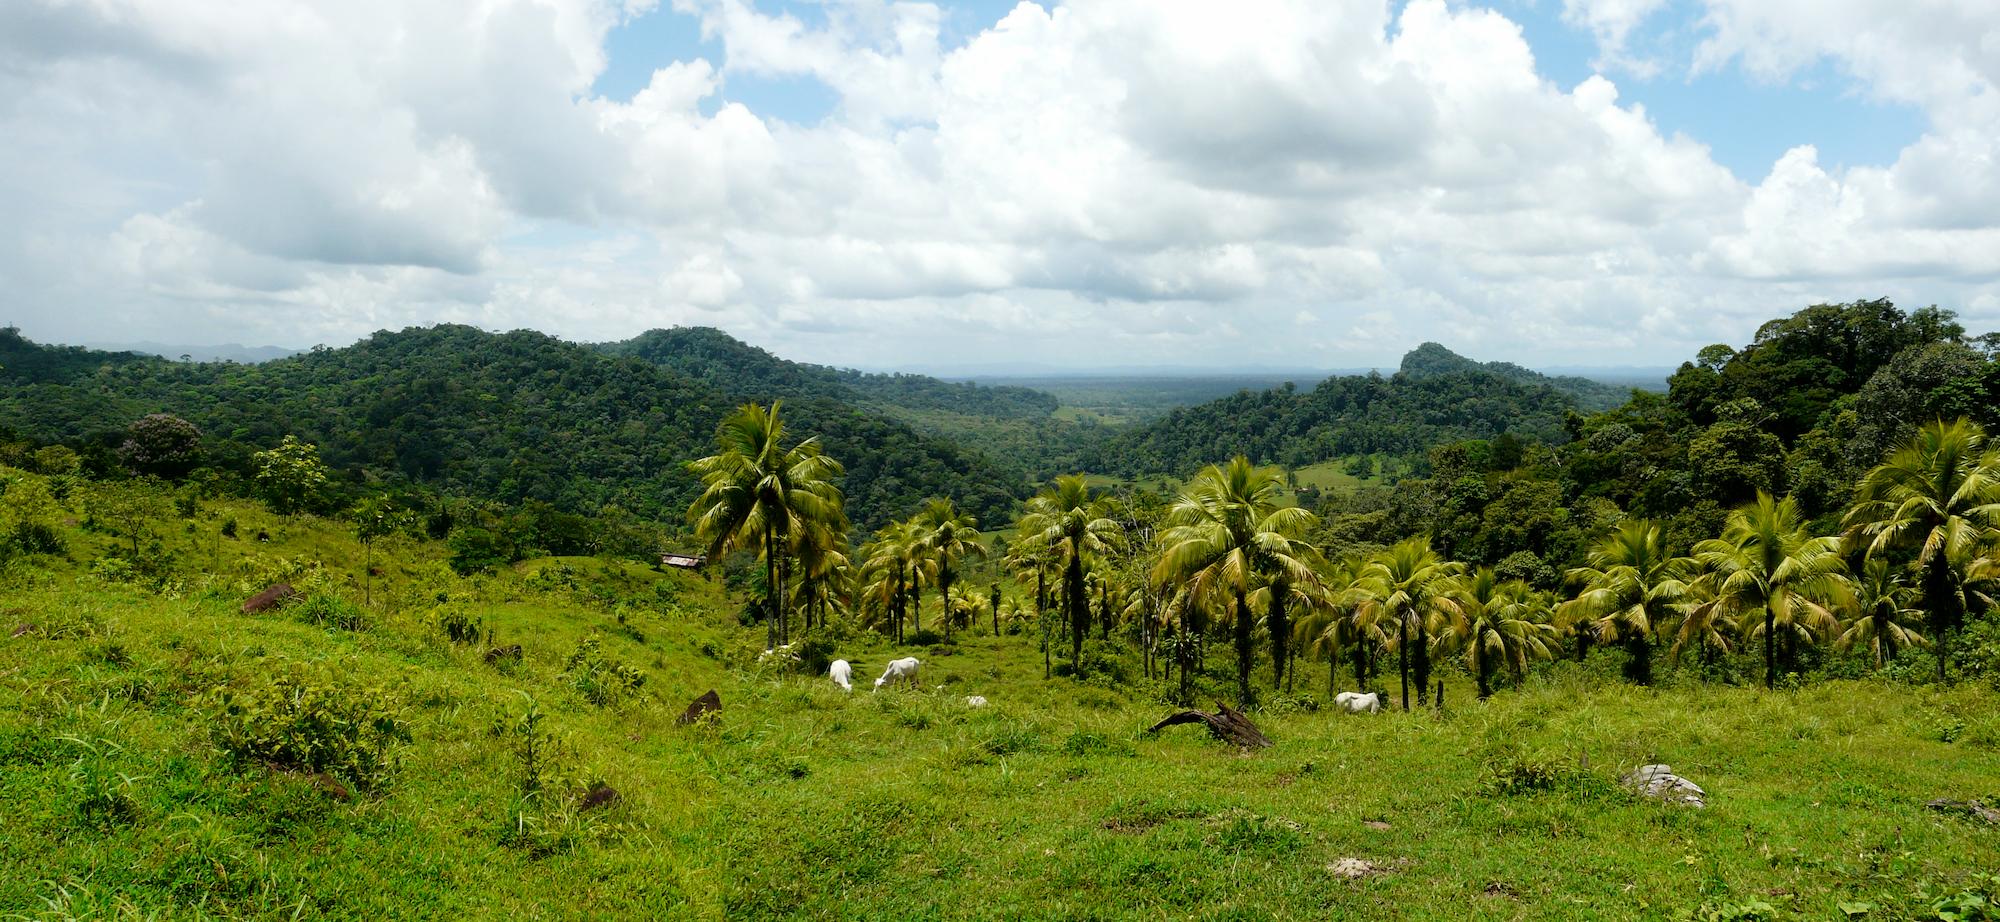 Visionswald in Costa Rica